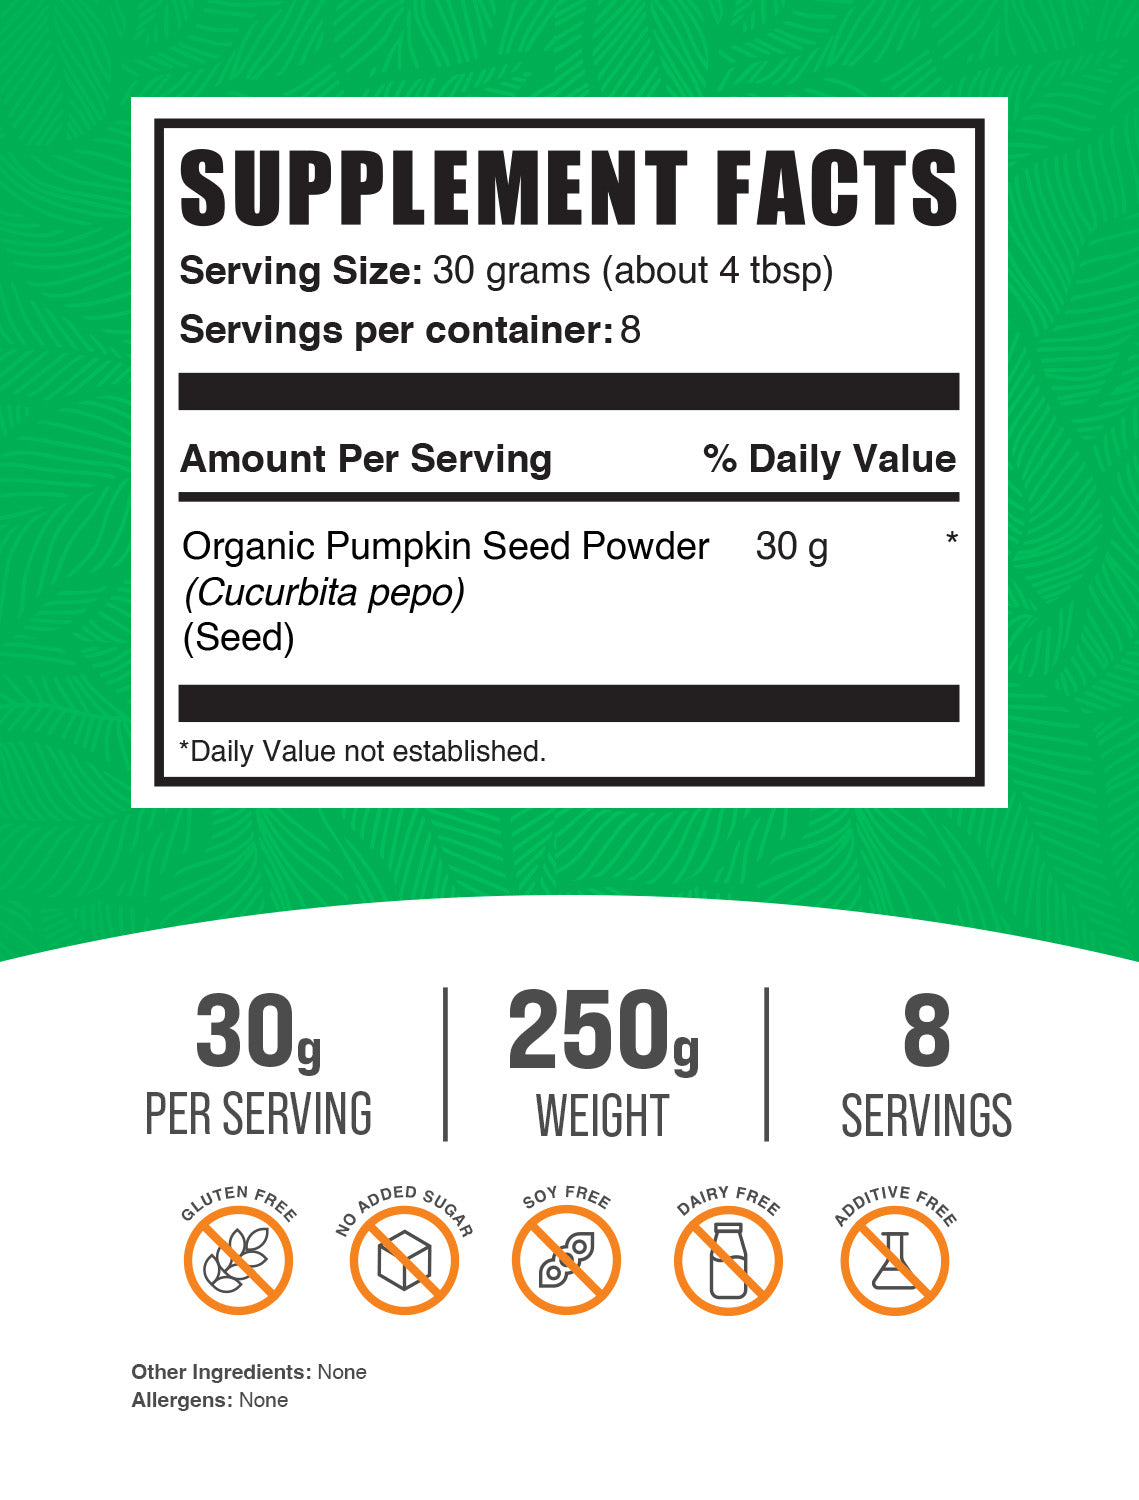 Organic Pumpkin Seed powder keyword image 250g